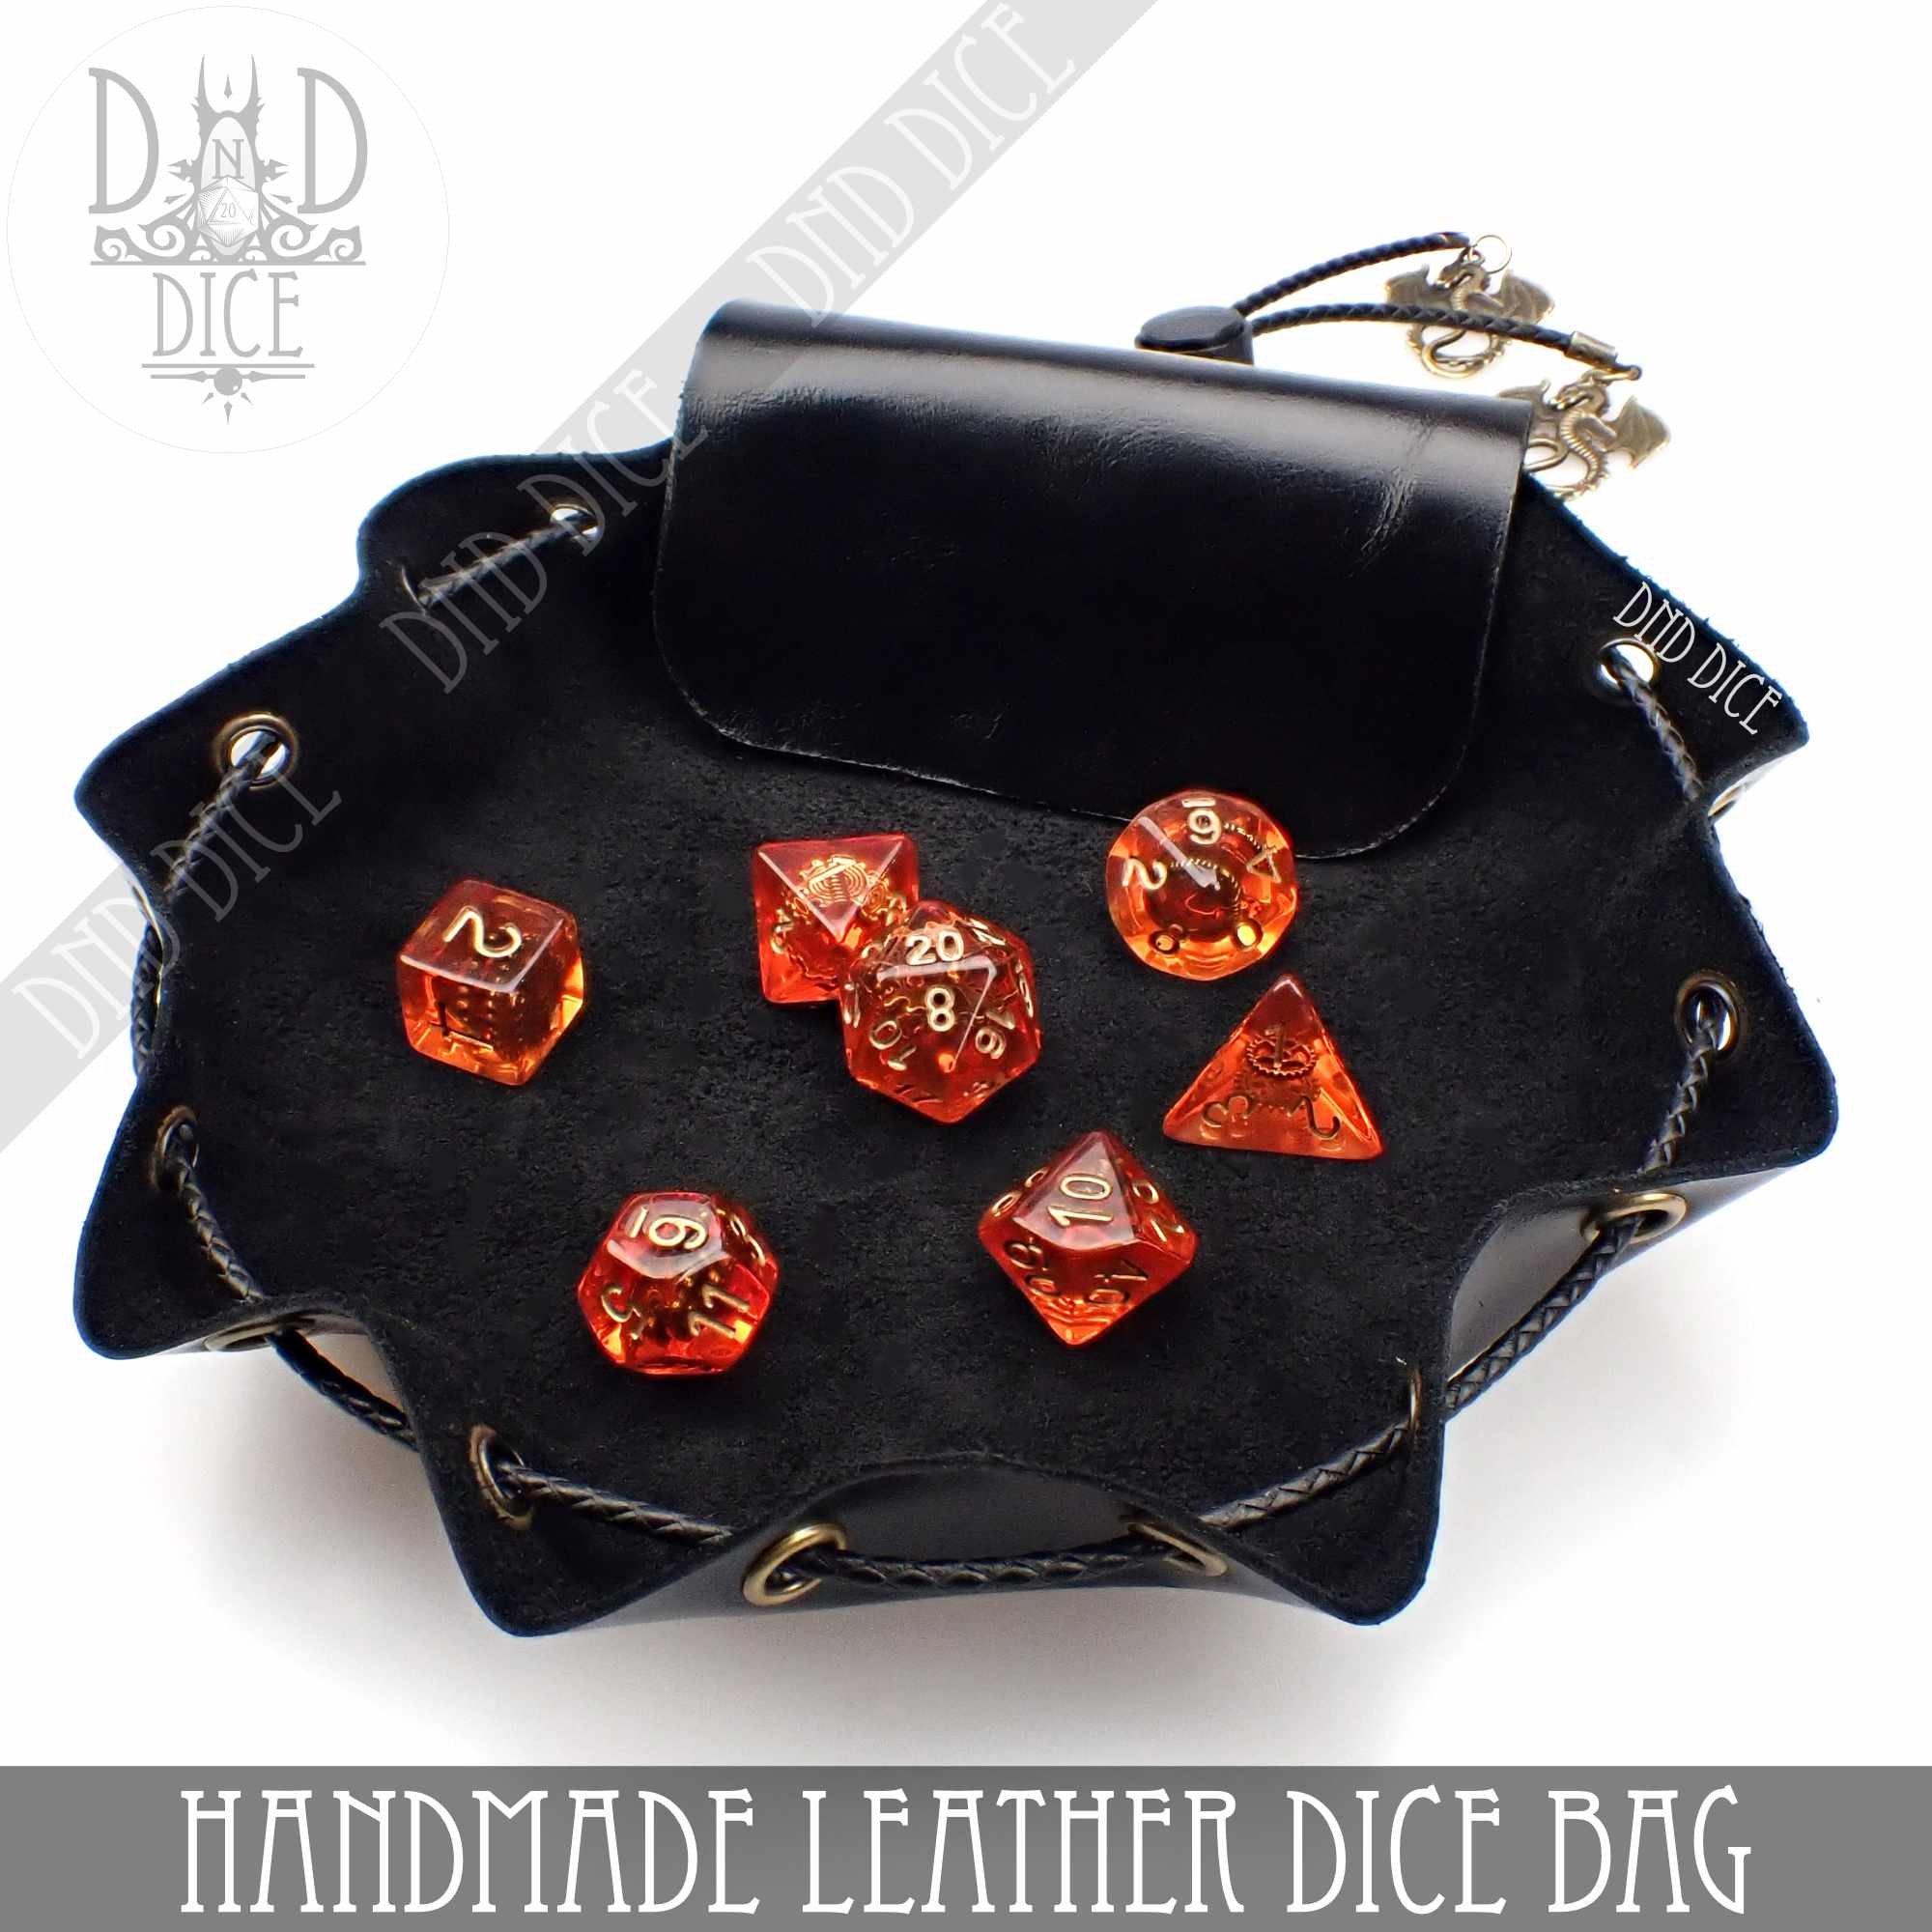 Italian Leather Dice Bag / Tray (Handmade)